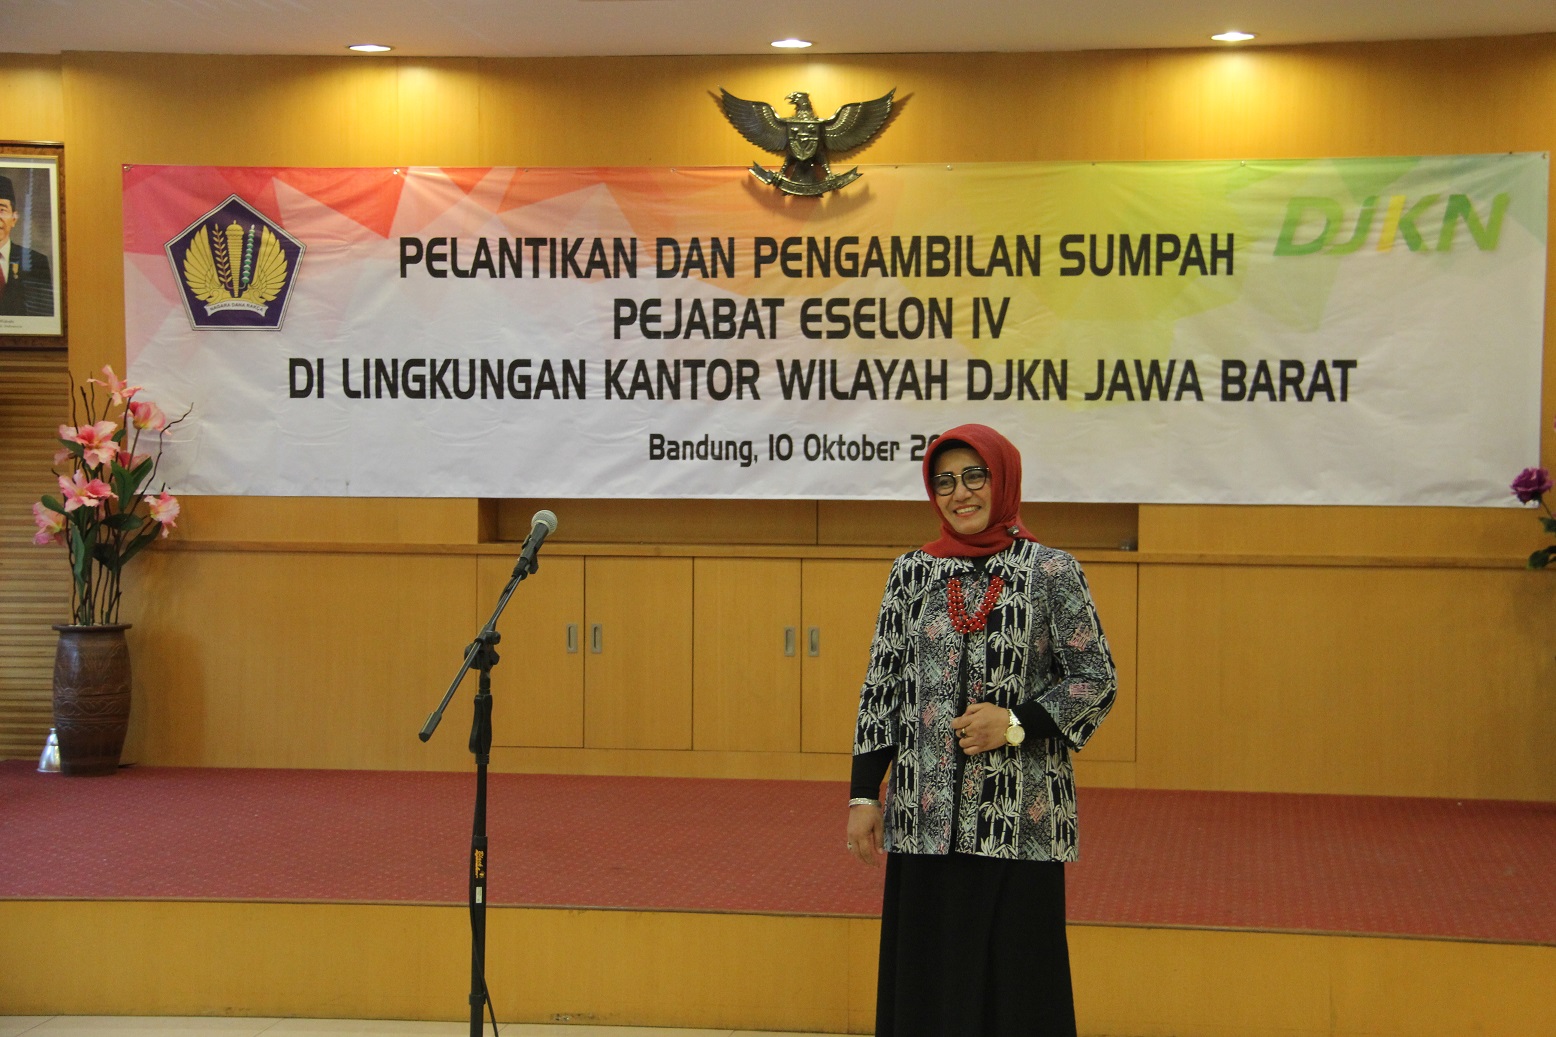 Pelantikan Pejabat Eselon IV Di Lingkungan Kantor Wilayah DJKN Jawa Barat